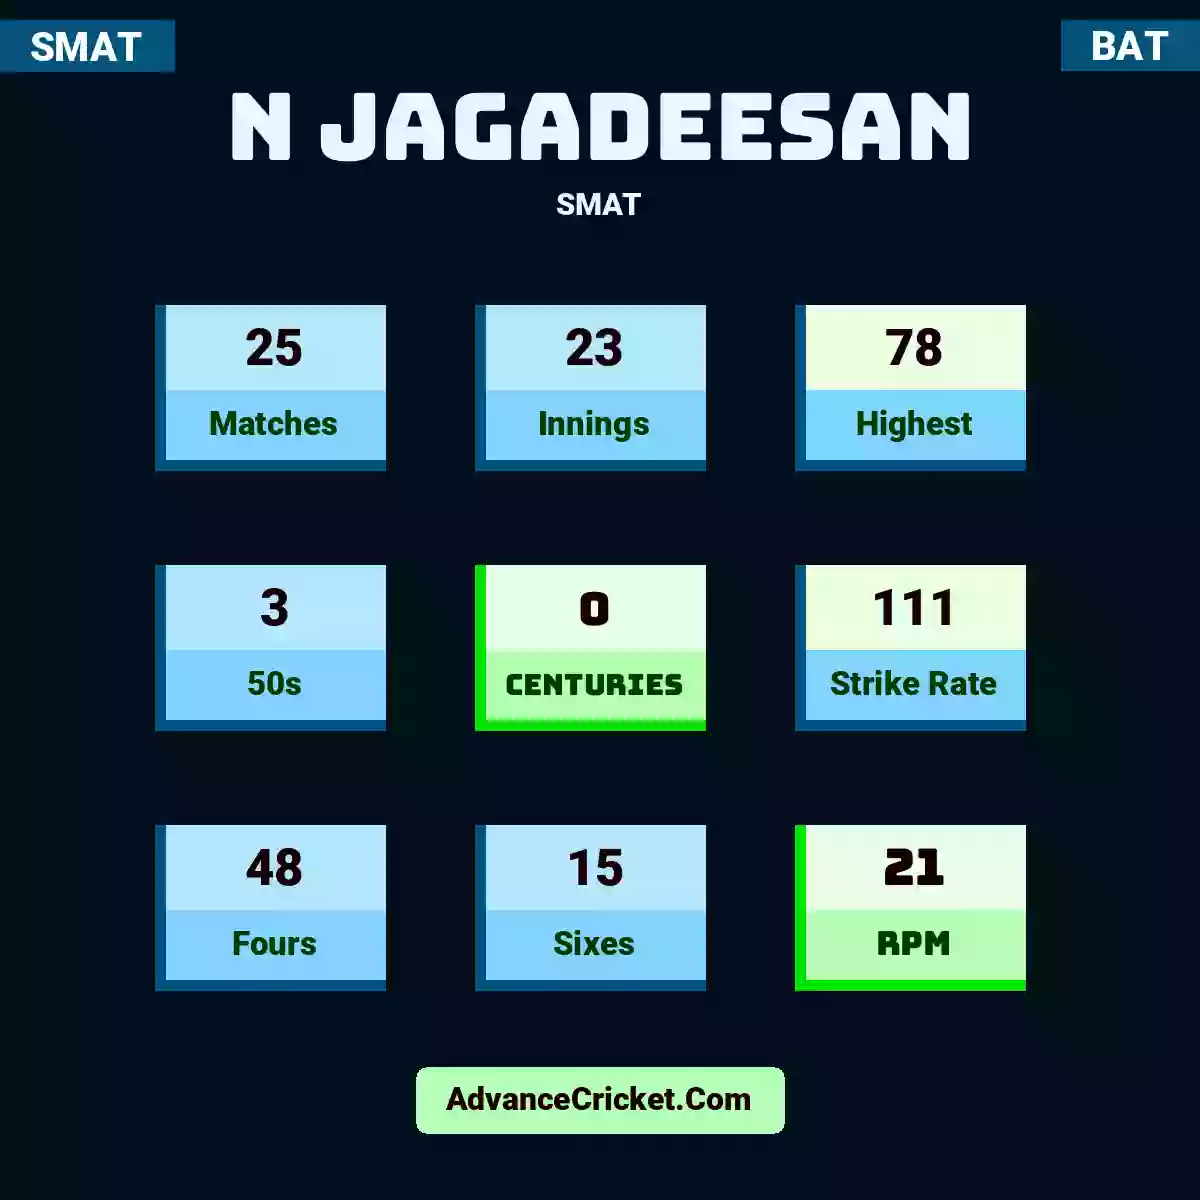 N Jagadeesan SMAT , N Jagadeesan played 25 matches, scored 78 runs as highest, 3 half-centuries, and 0 centuries, with a strike rate of 111. N.Jagadeesan hit 48 fours and 15 sixes, with an RPM of 21.